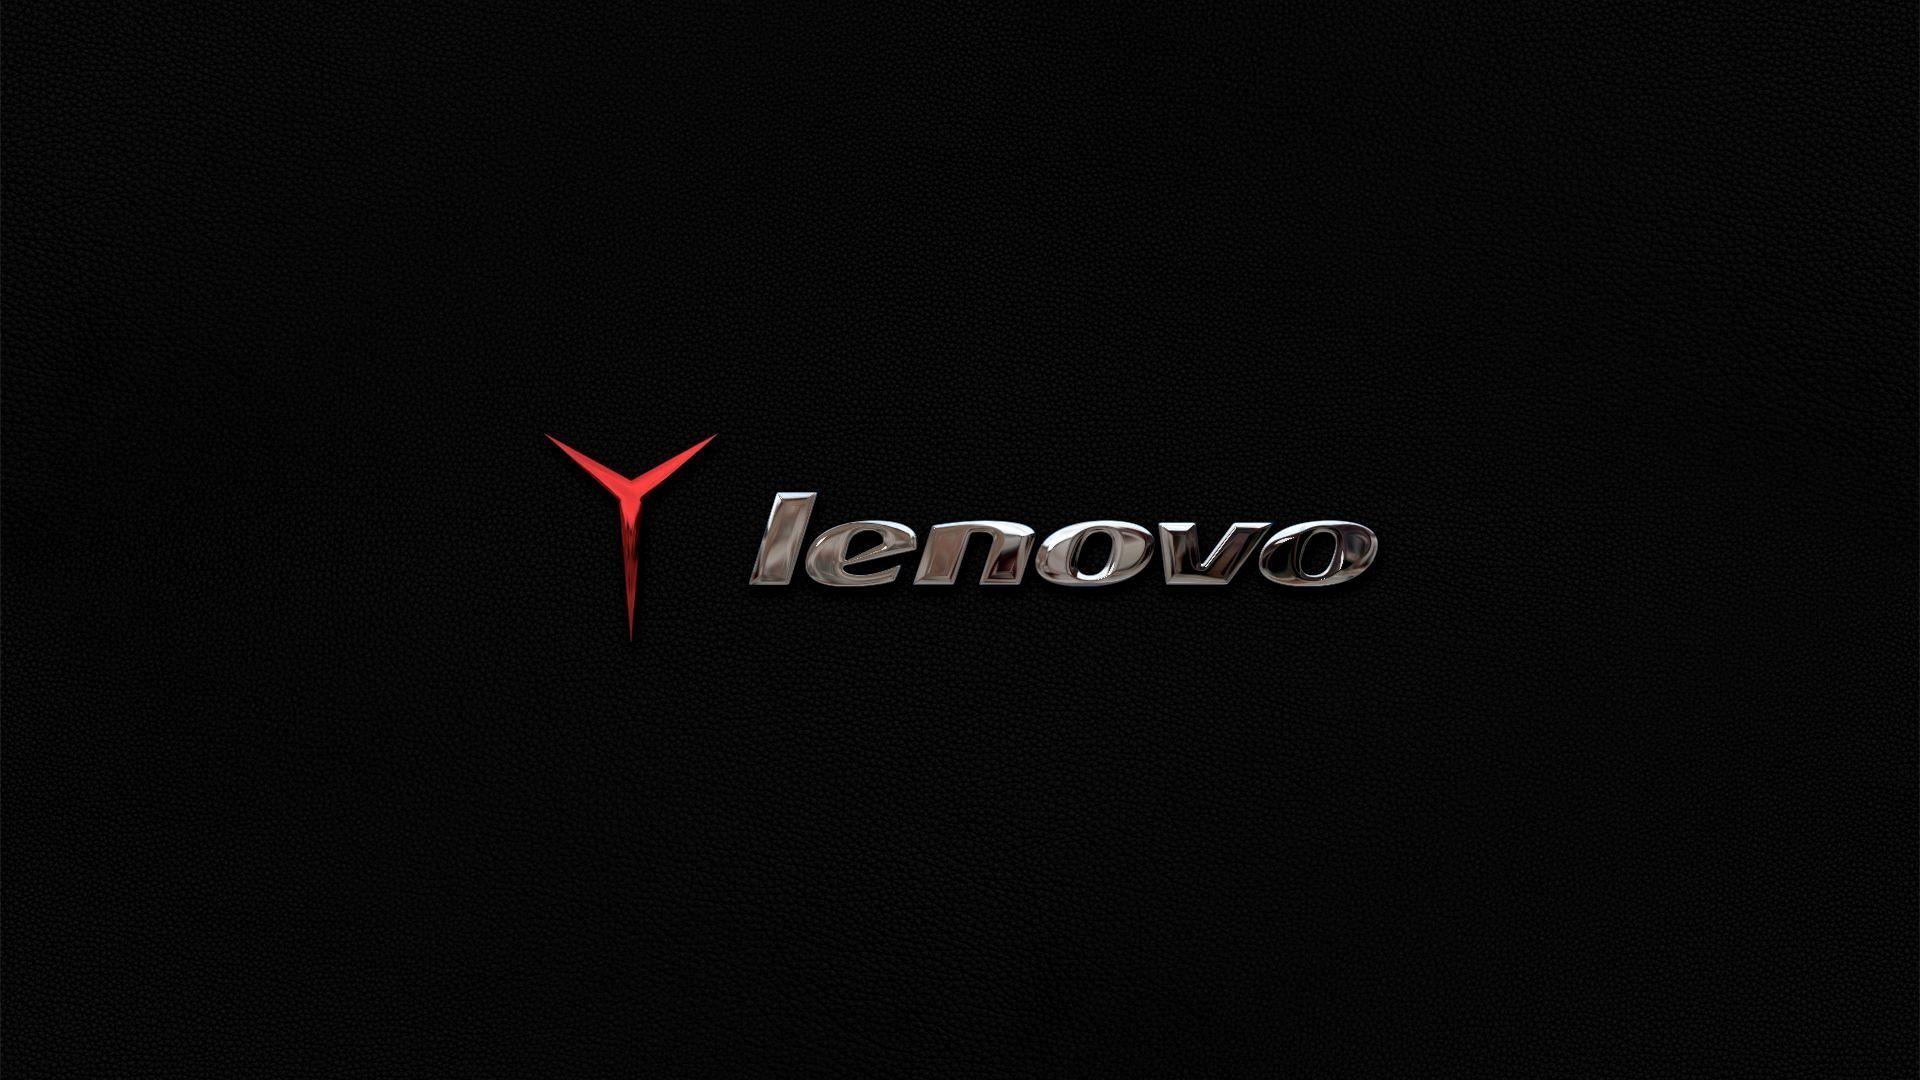 Lenovo 4K Desktop Wallpapers - Top Free Lenovo 4K Desktop Backgrounds ...